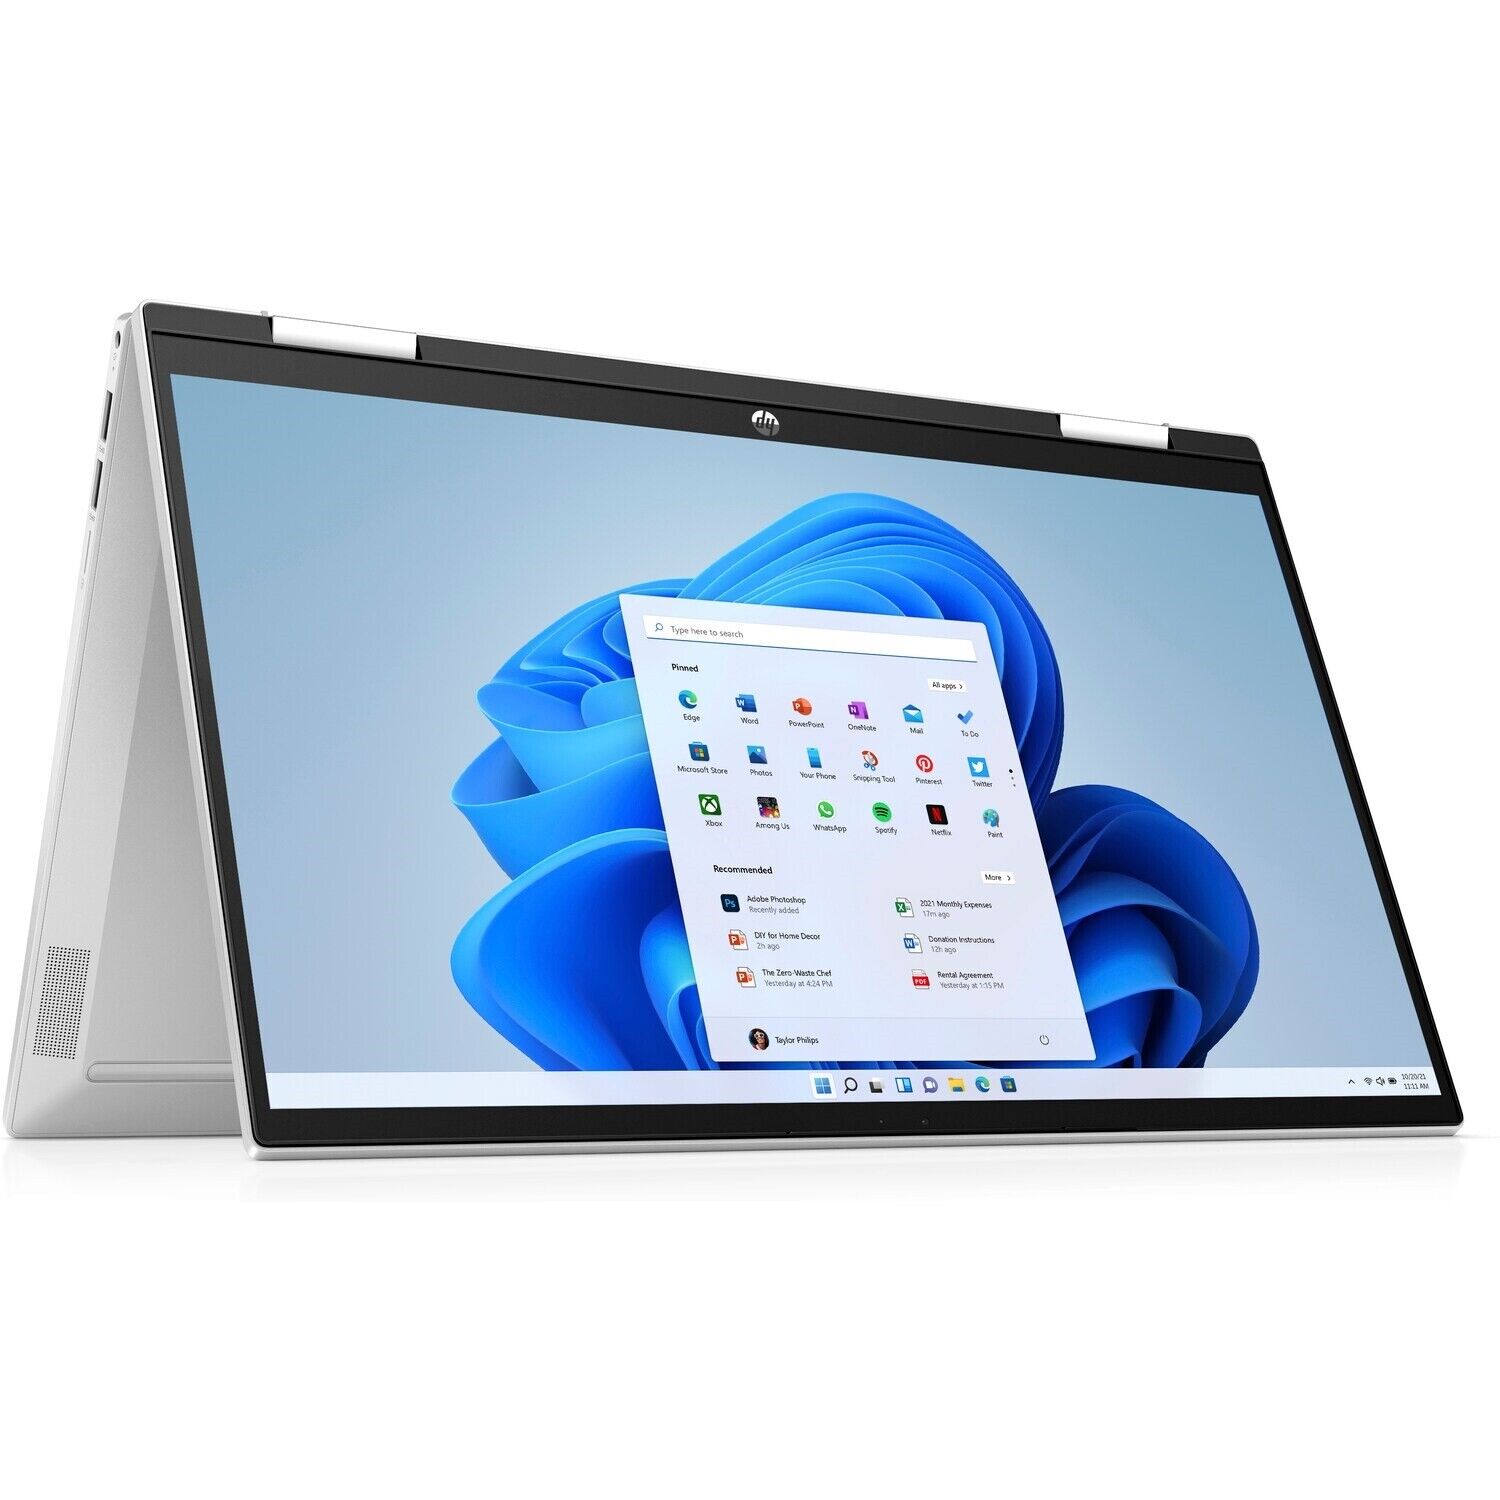 HP Pavilion x360 15-er1025od Touchscreen Laptop Intel Core i5 8GB RAM 256GB SSD